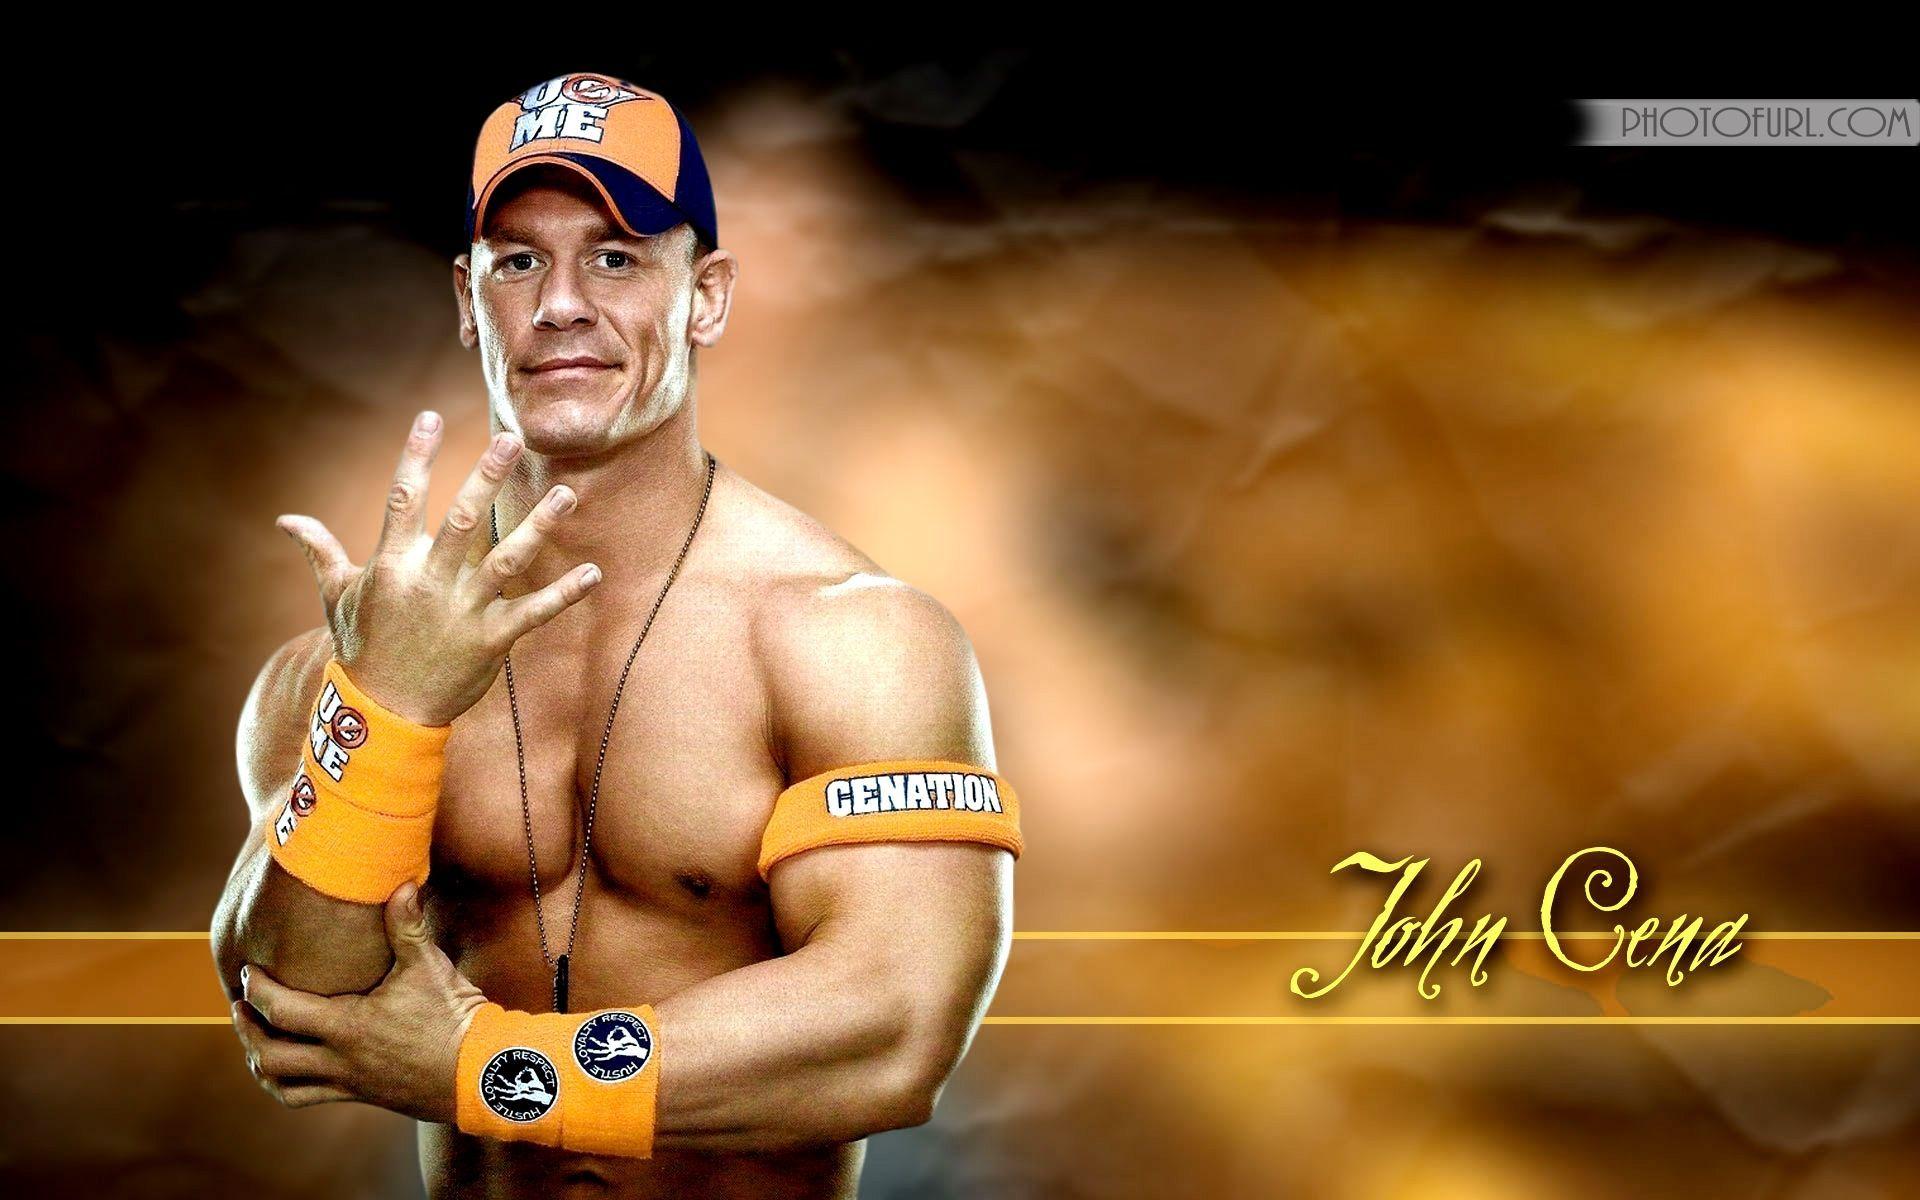 John Cena Wallpaper Free Download. Image Wallpaper